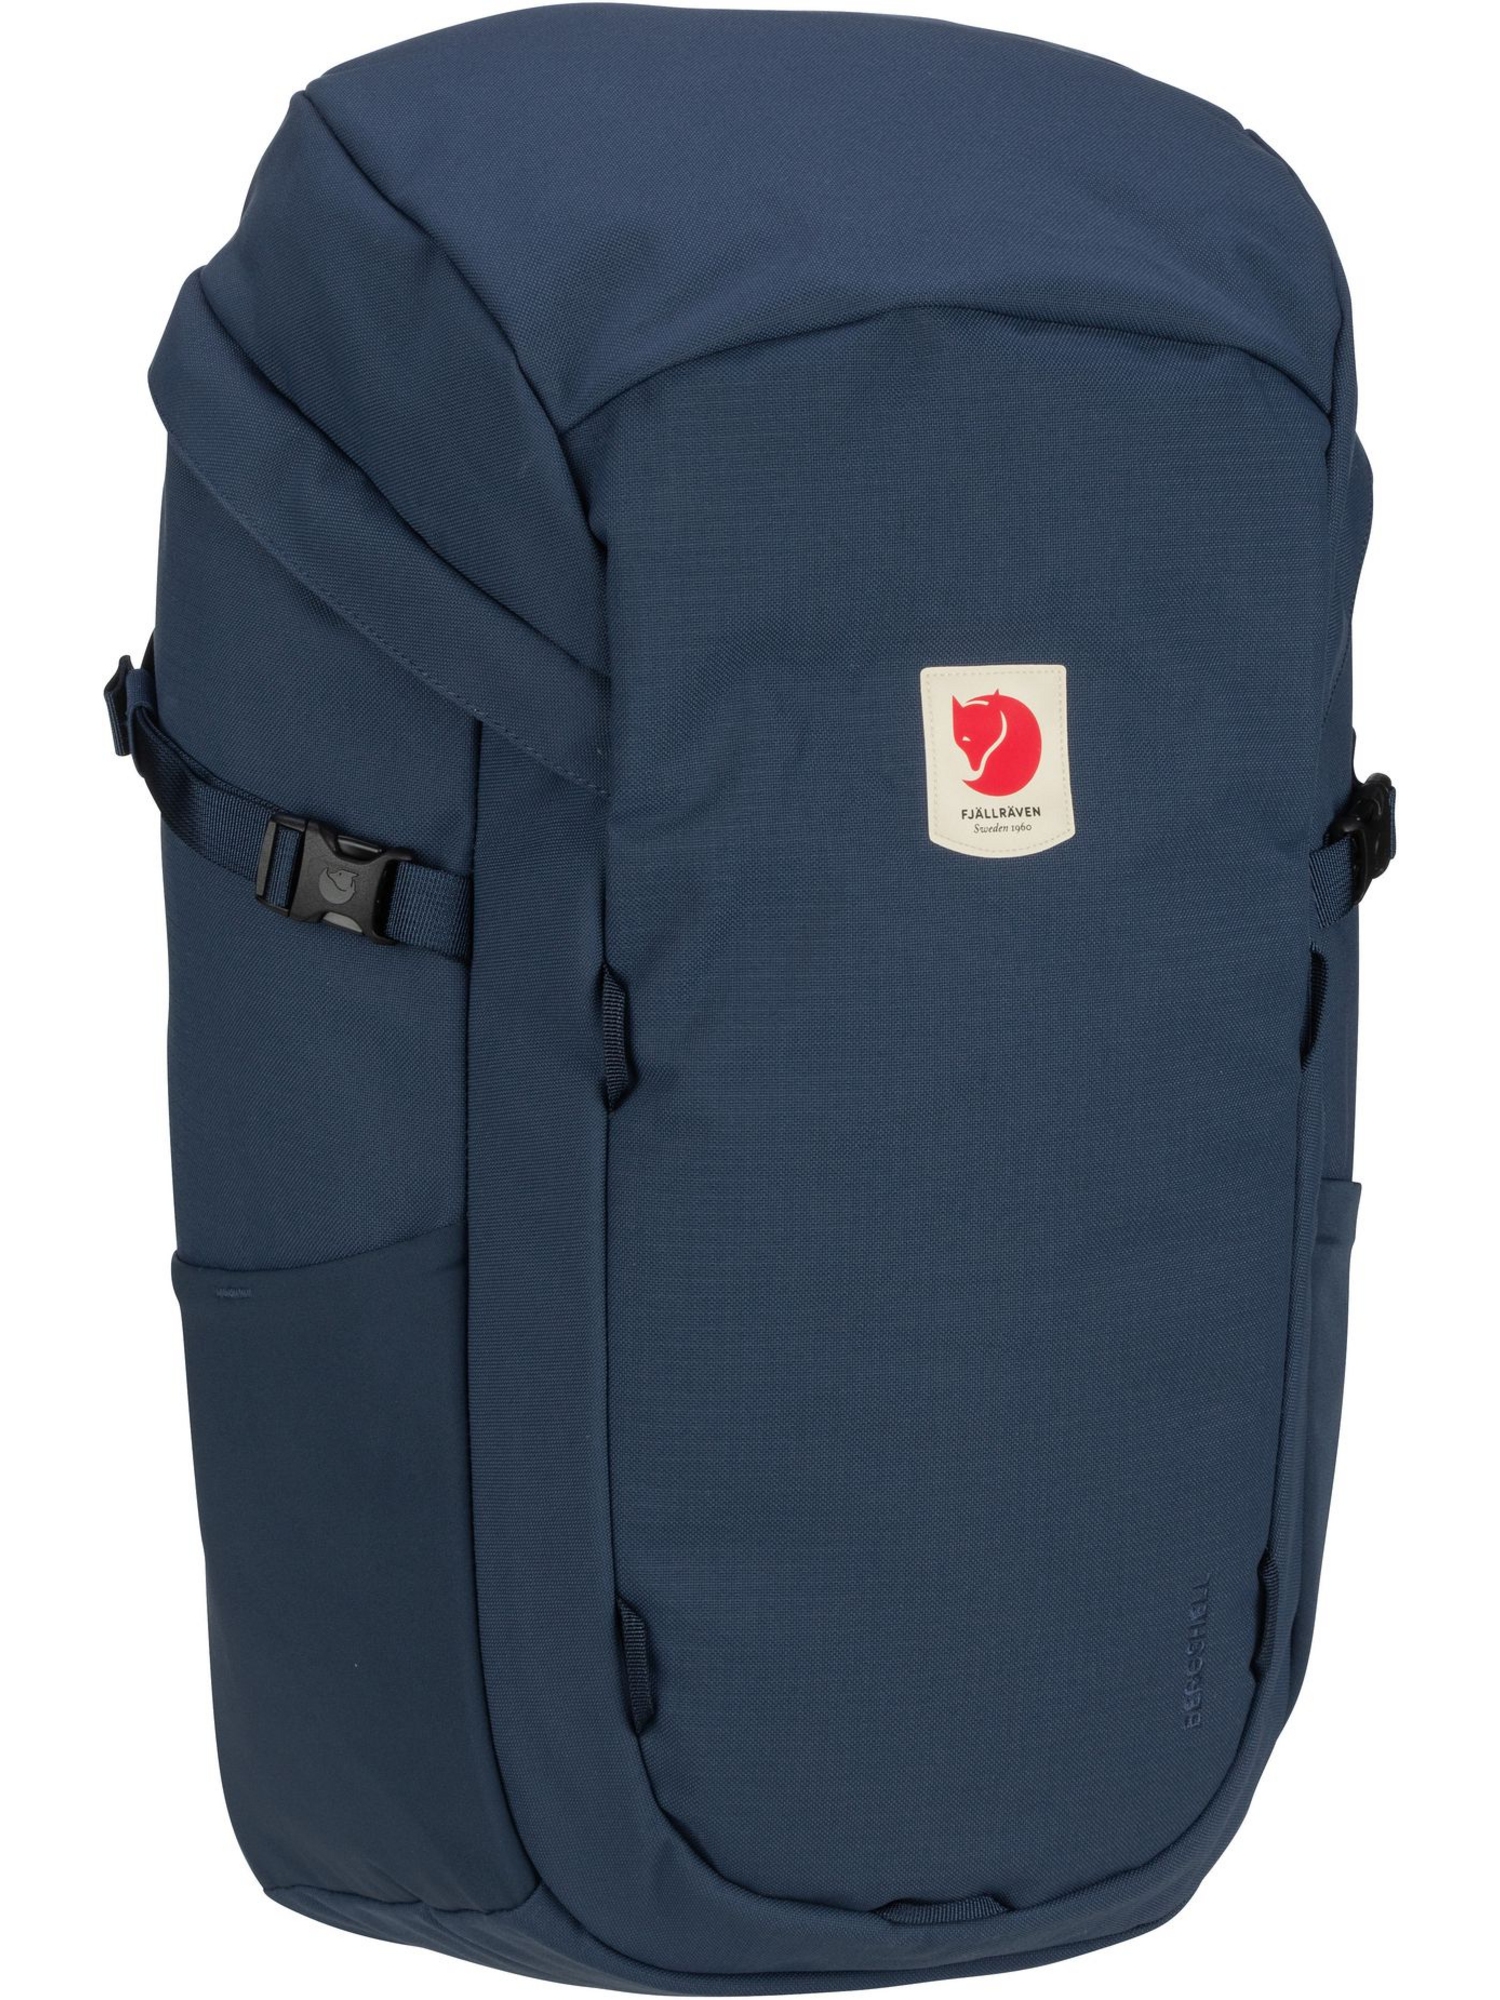 Рюкзак FJÄLLRÄVEN / Backpack Ulvö 30, цвет Mountain Blue сумка рюкзак ulvö среднего размера fjällräven цвет mountain blue